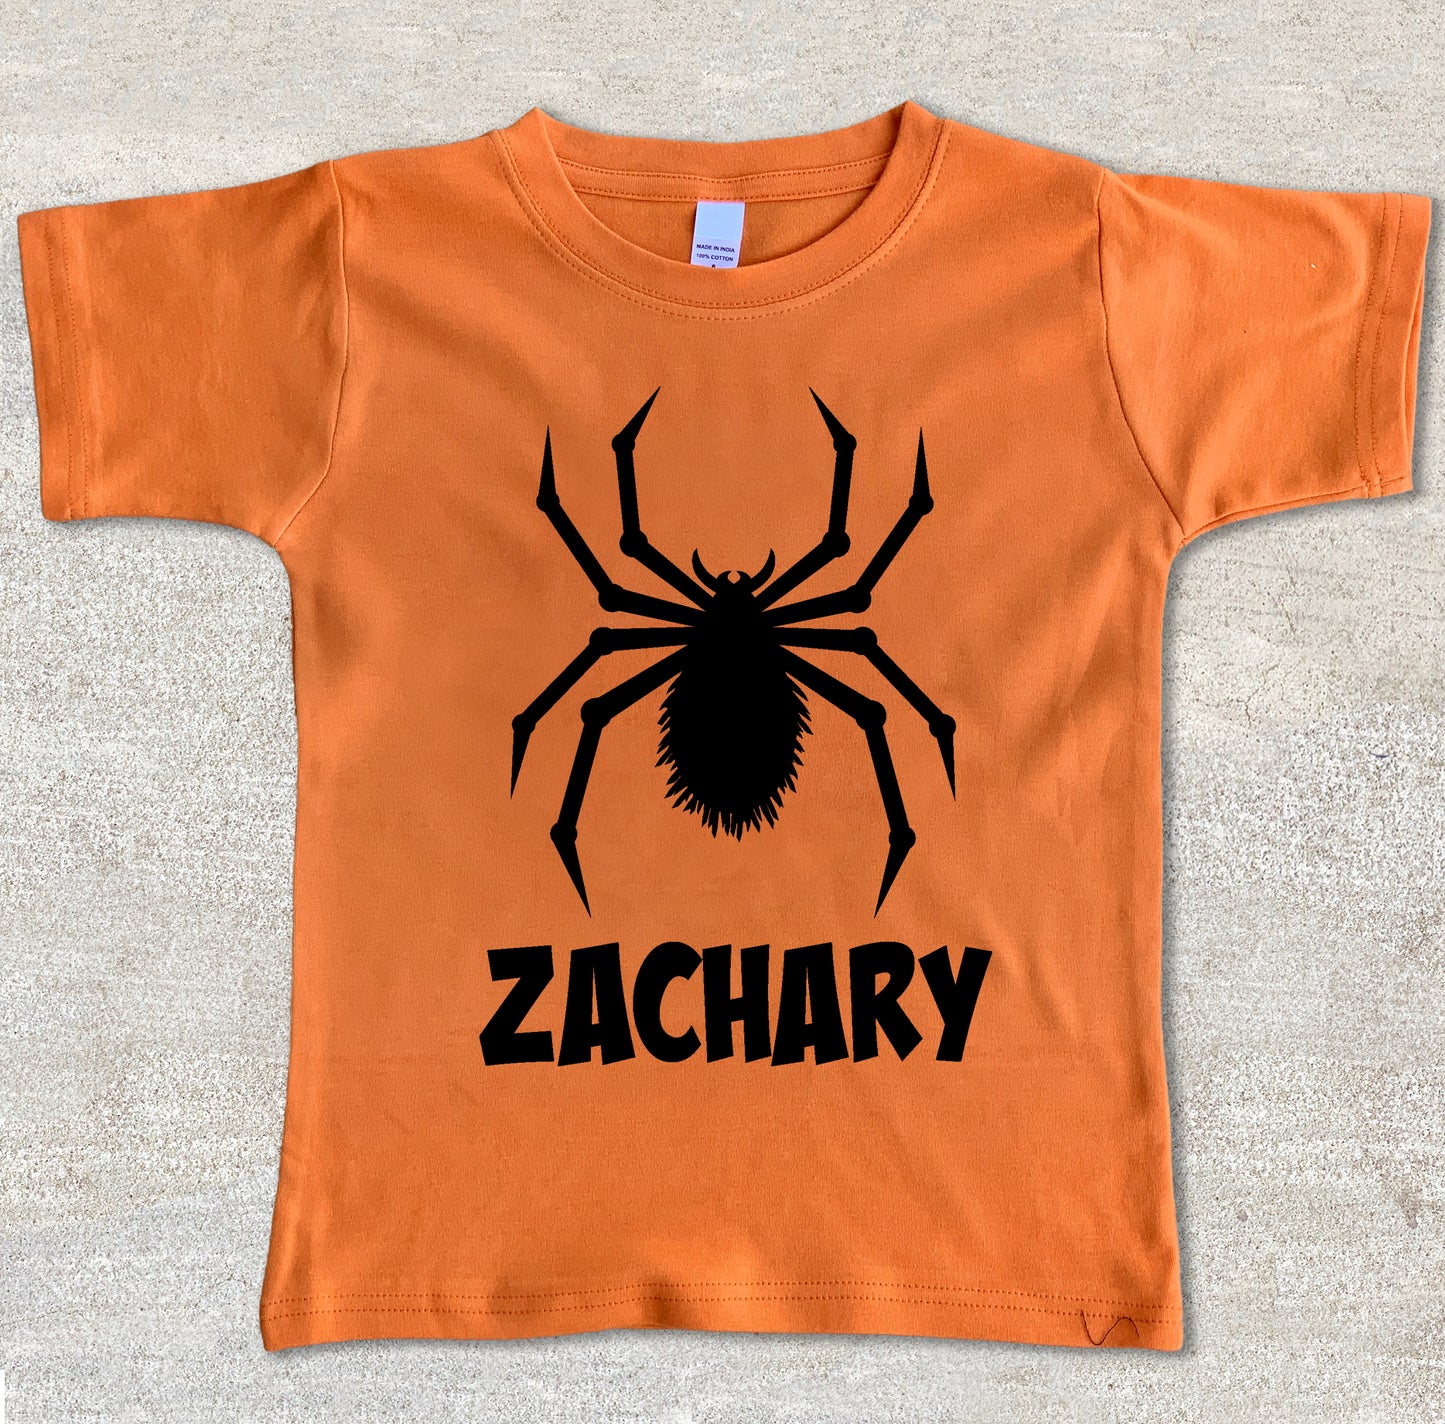 Kids halloween shirt for boys Spider